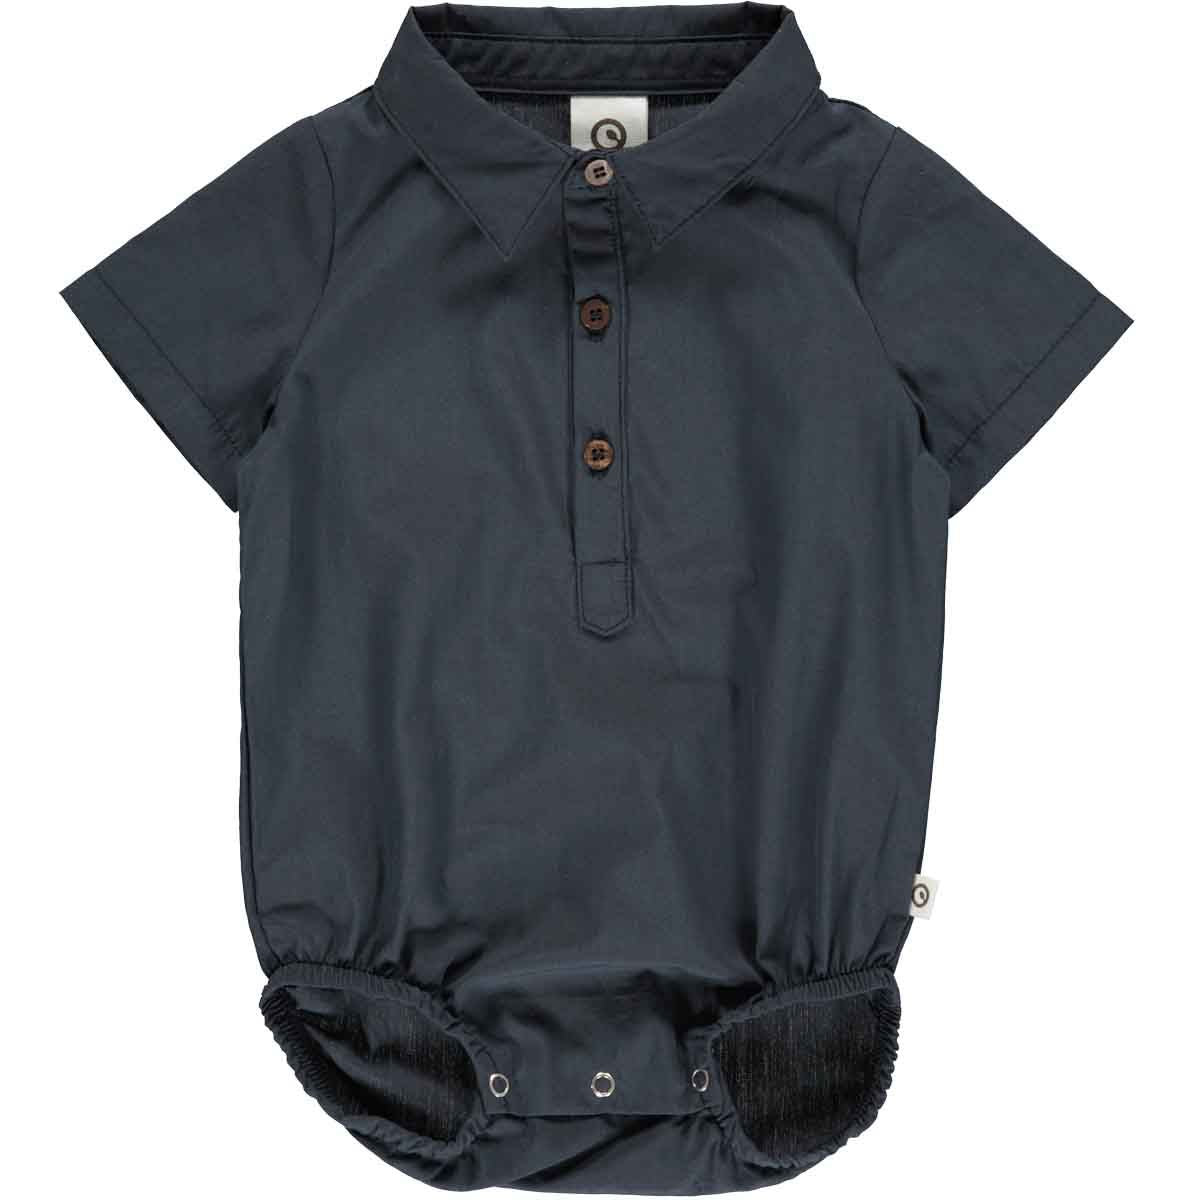 body blouse hemd Müsli 100% organisch katoen fairtrade gemaakt babykleding duurzame kinderkleding sustainable kids clothing